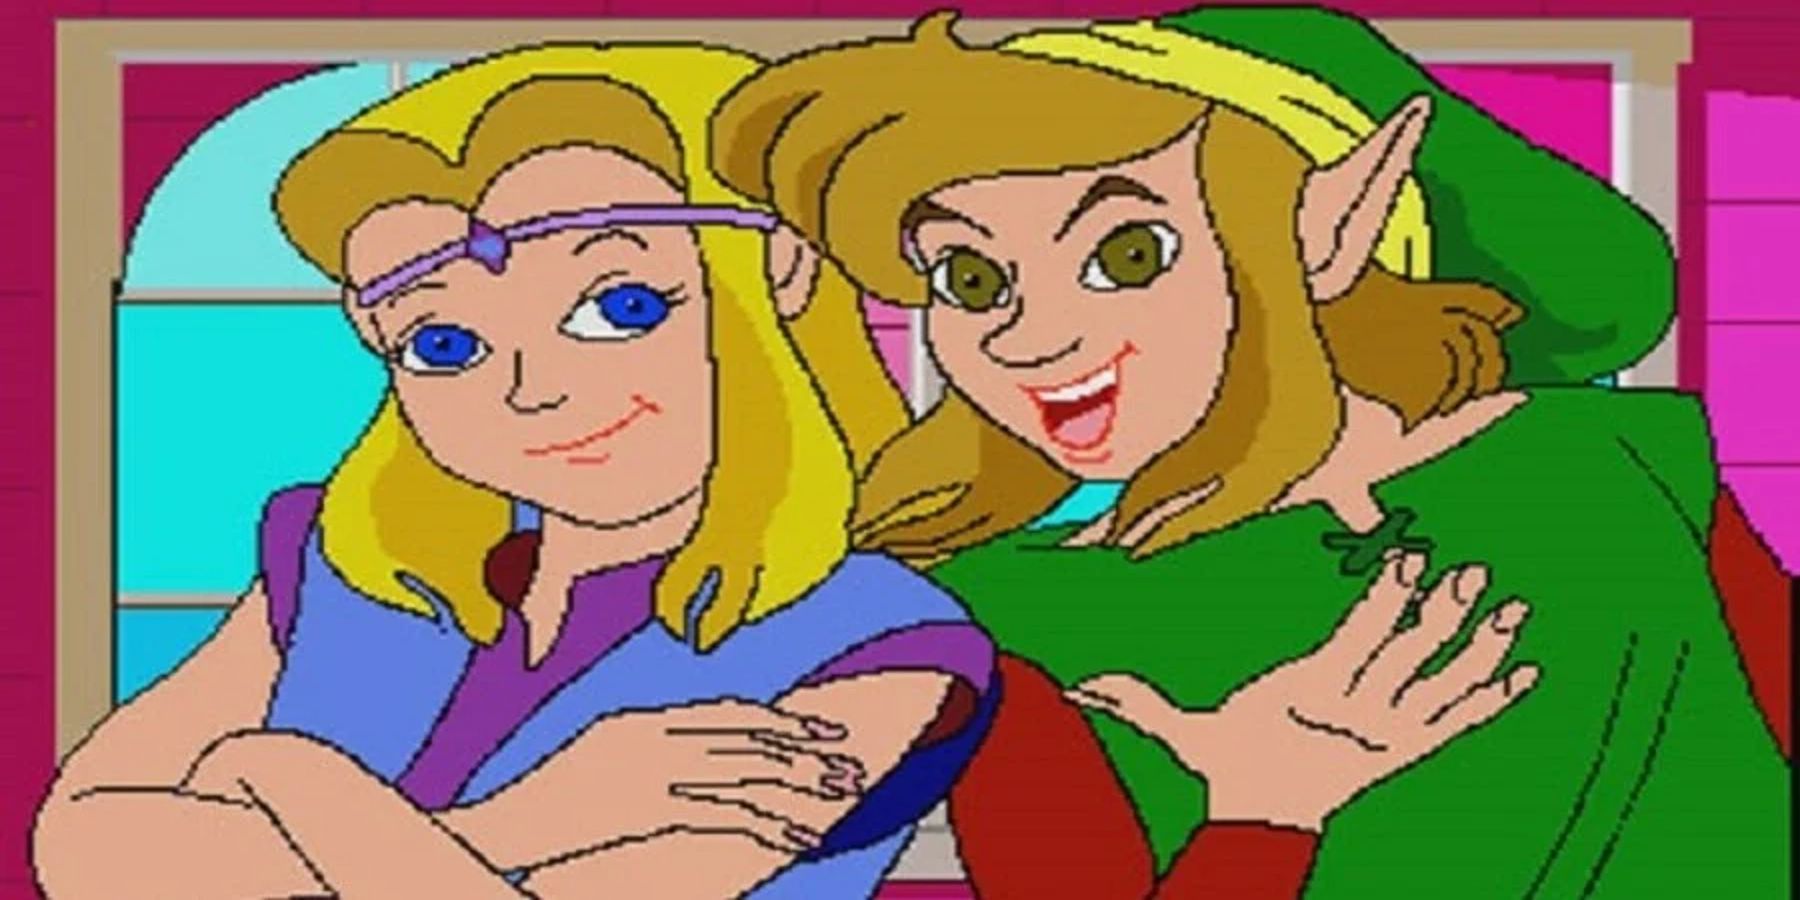 A still from a cutscene from Legend of Zelda's cutscenes, developed by Animation Magic.